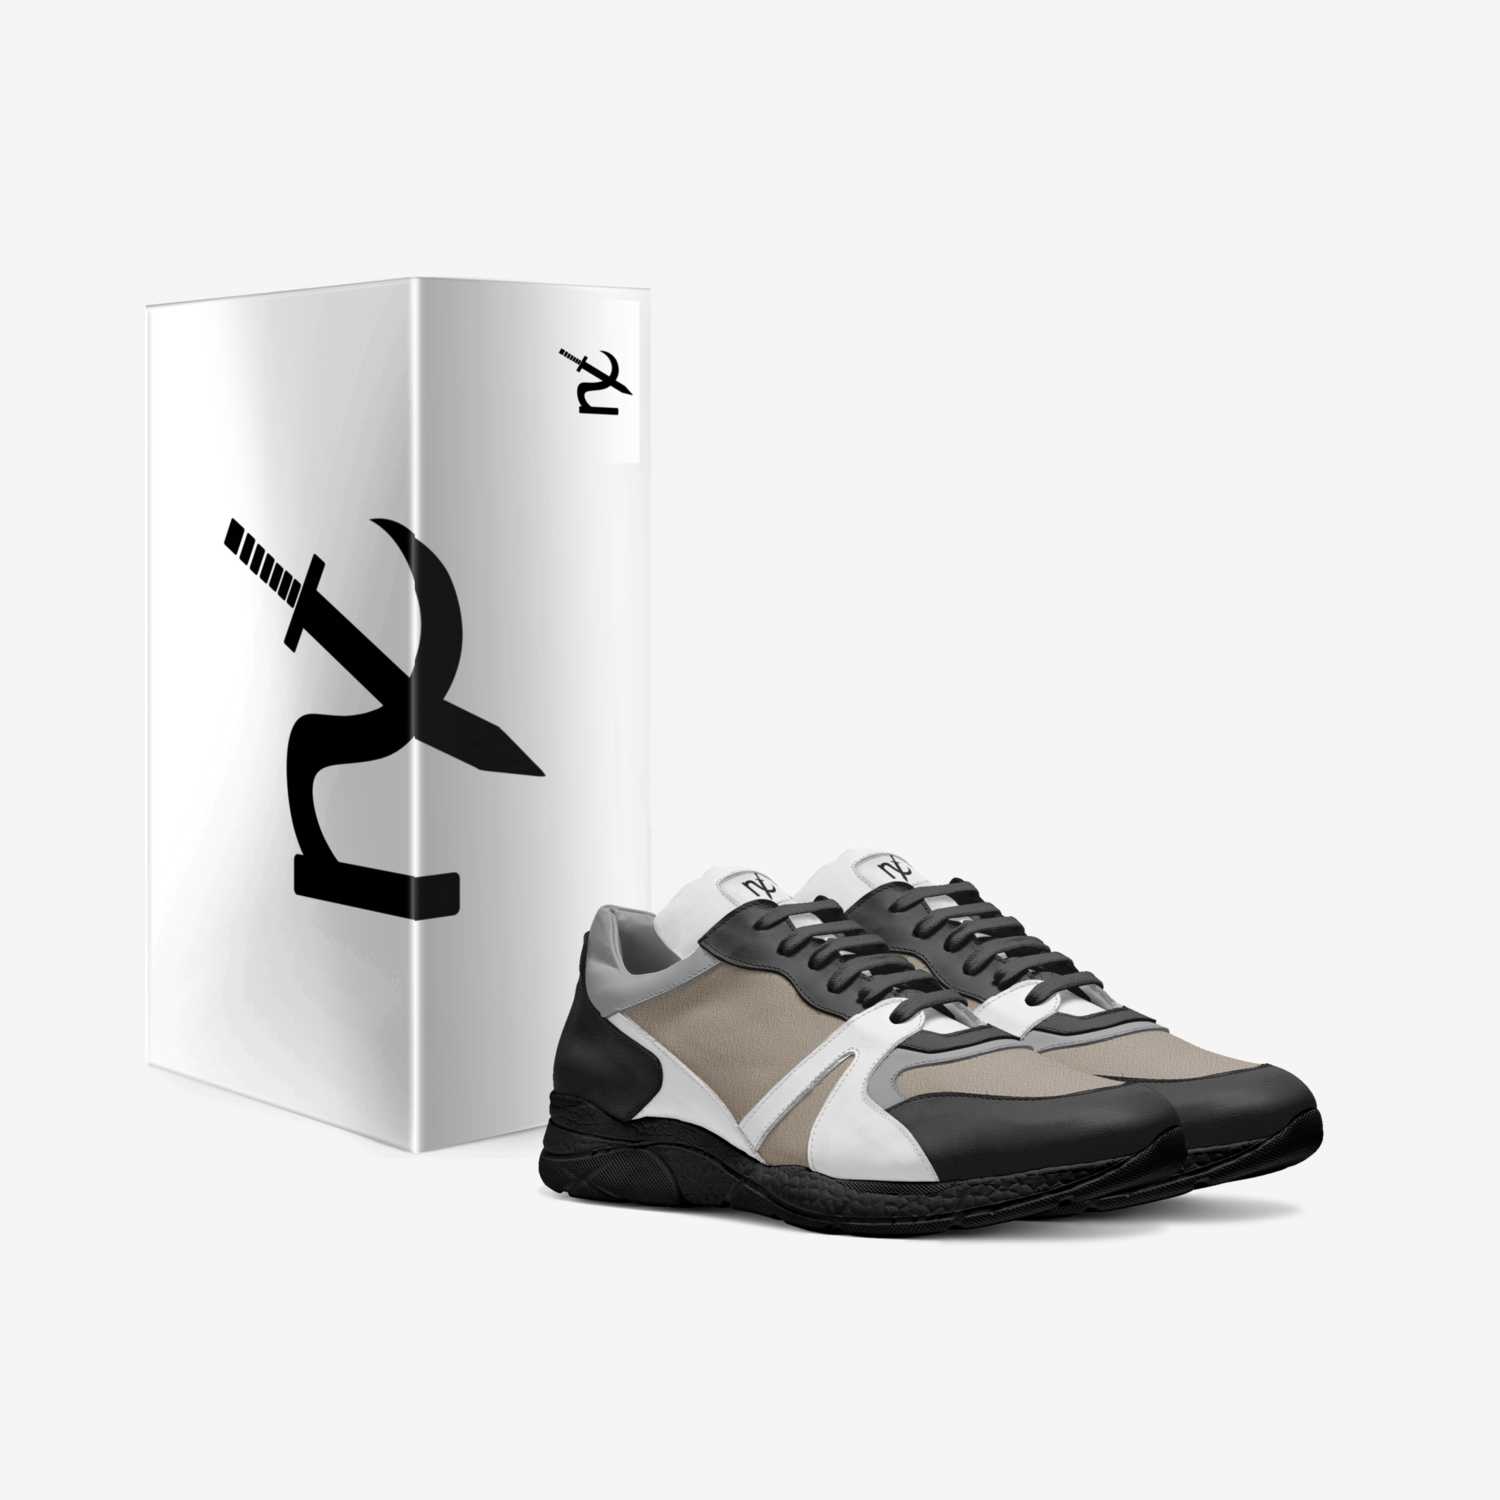 NEX STEPS custom made in Italy shoes by Jonon Blair | Box view